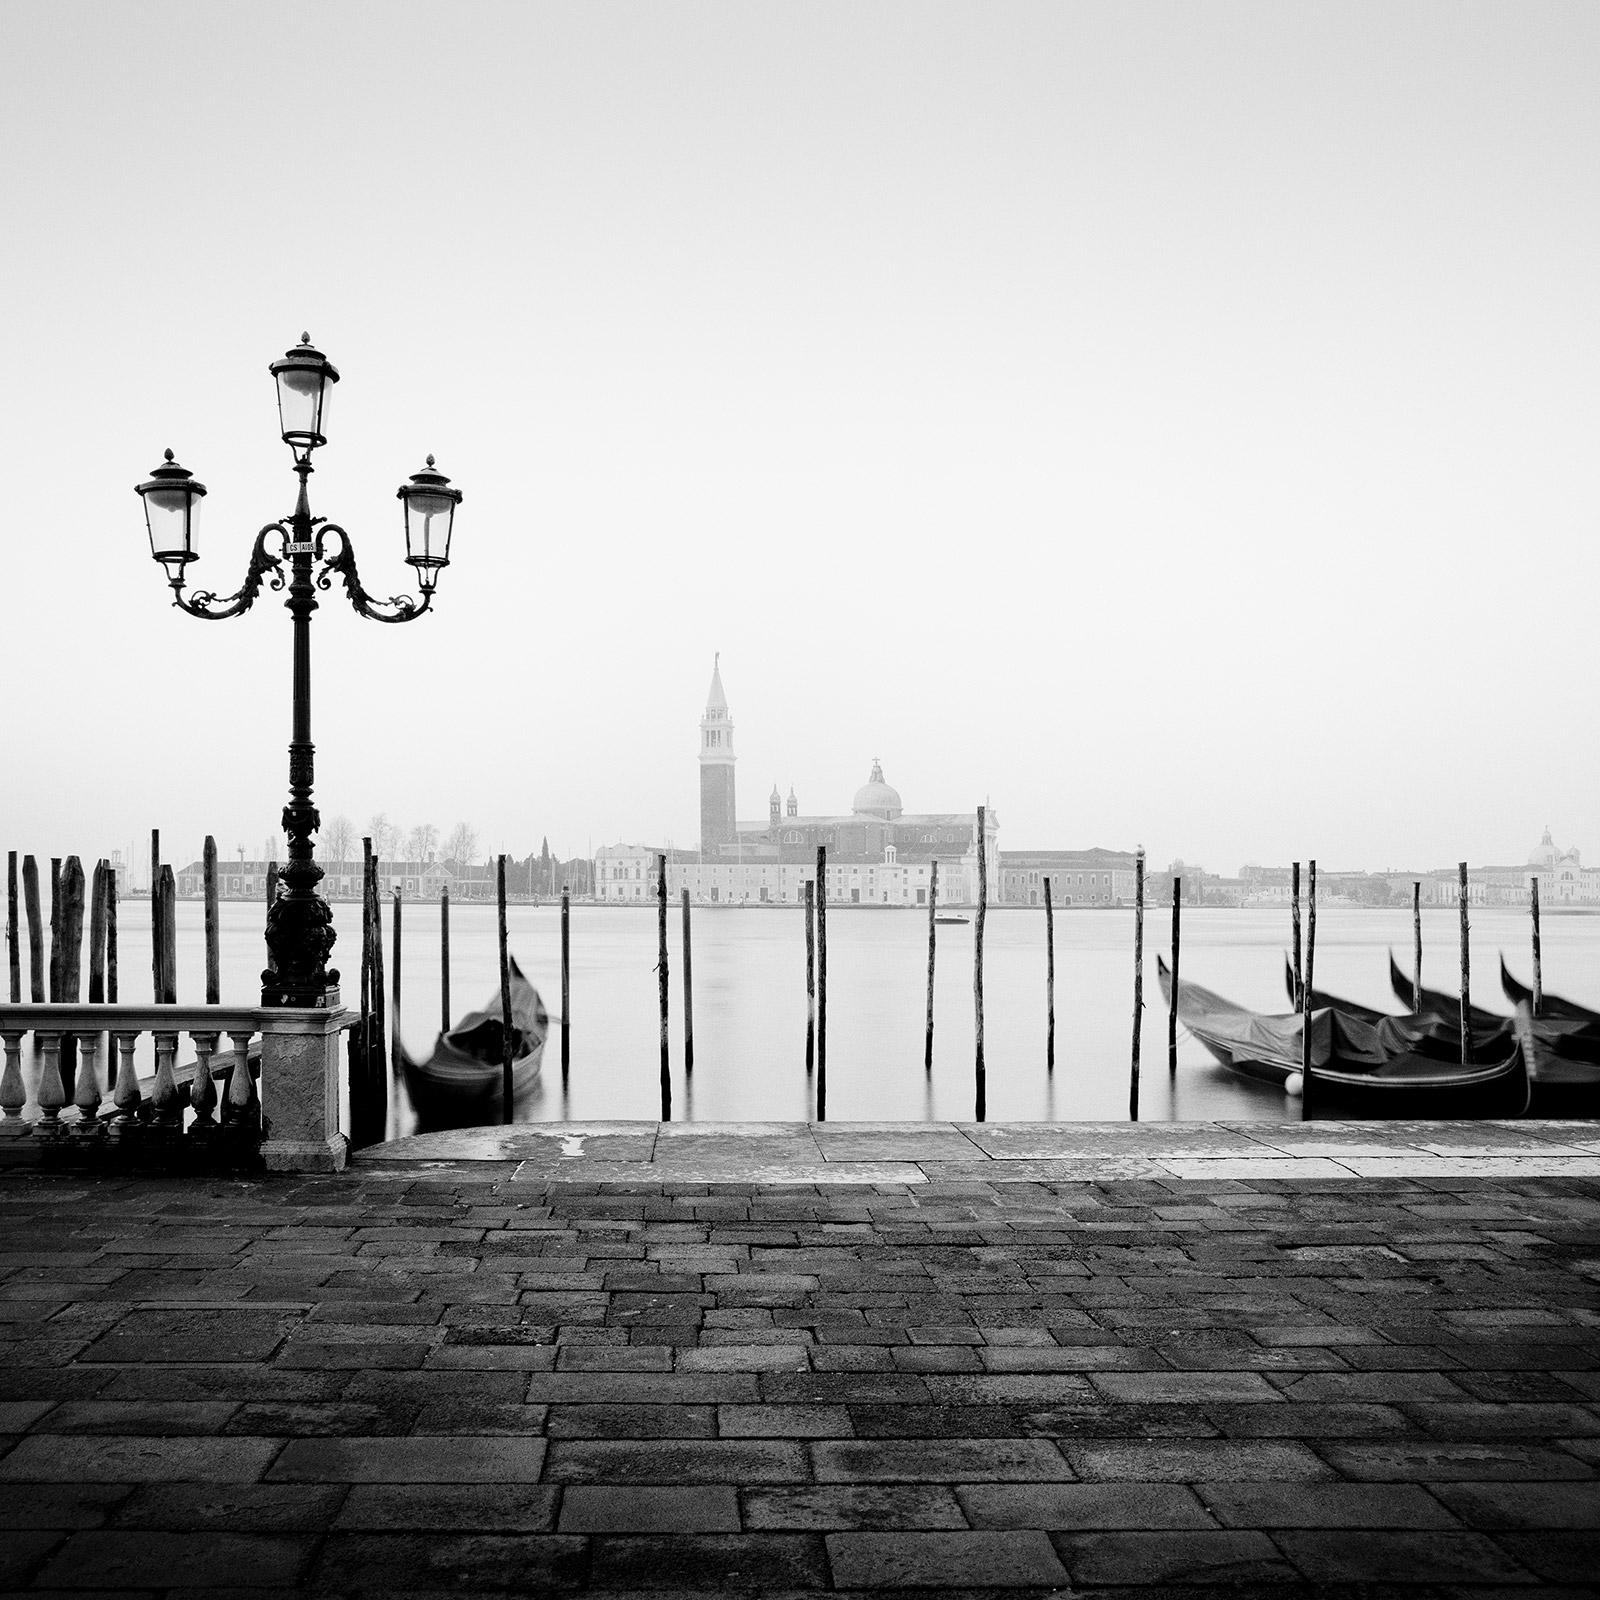 More Free Space Basilica Venice Italy black white fine art landscape photography